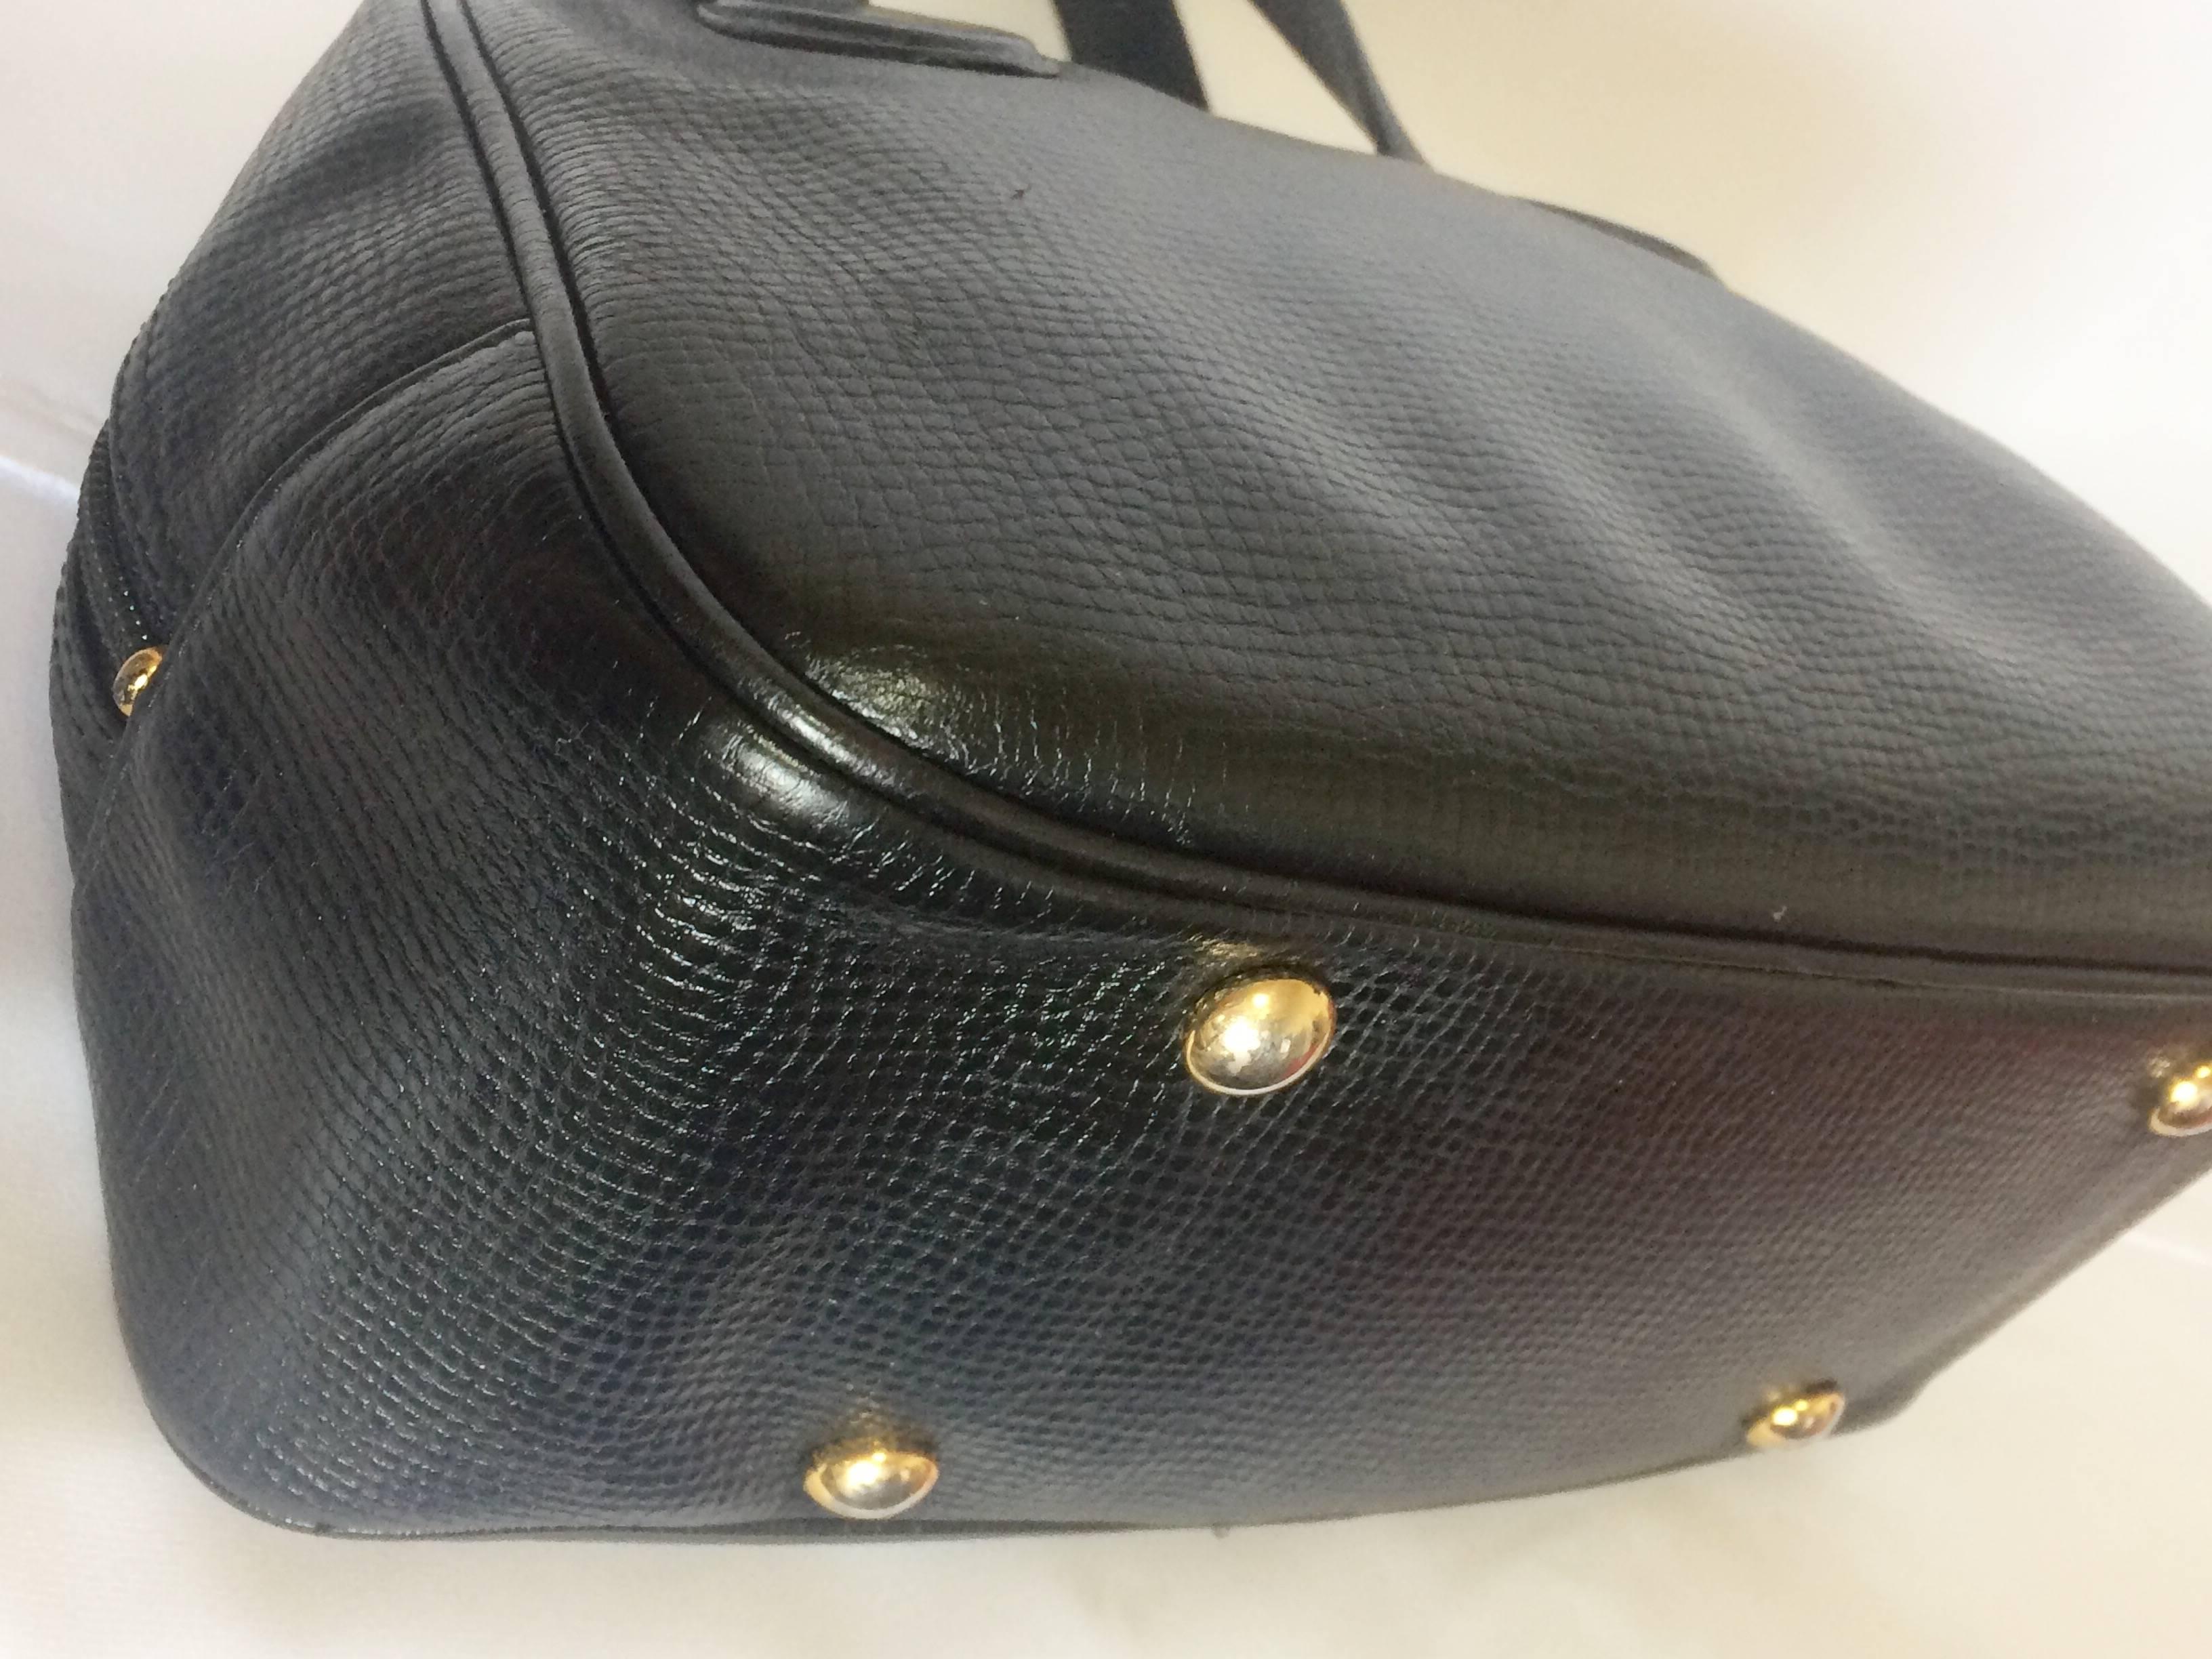 Vintage Christian Dior black leather mini bolide style handbag with logo motif. 2